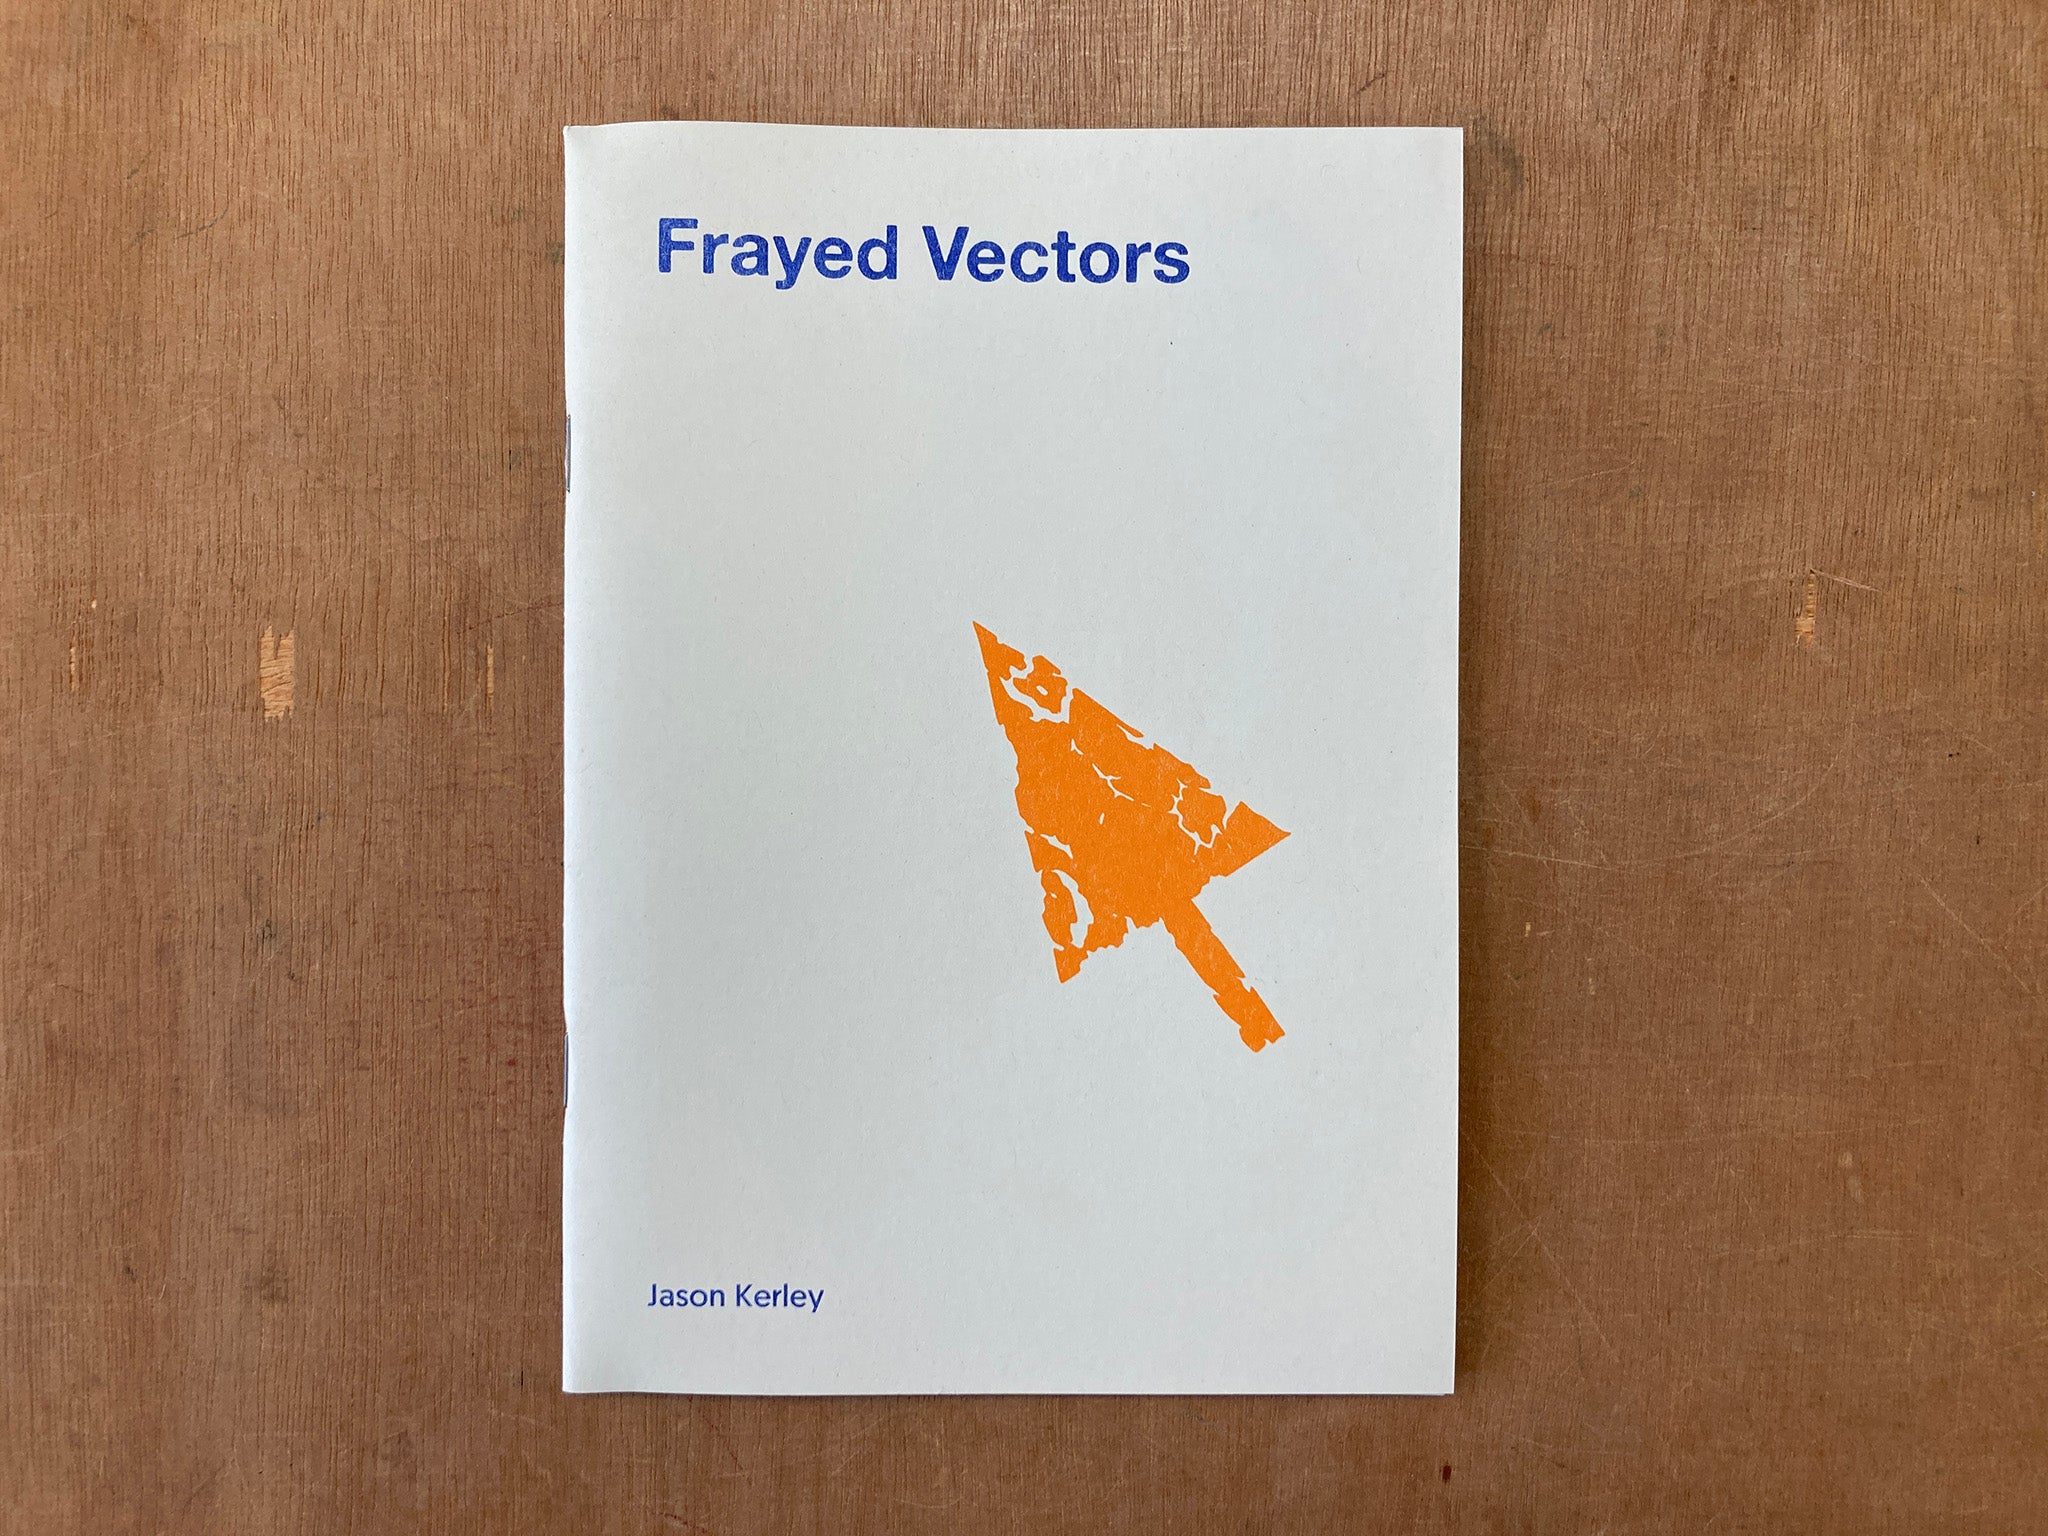 FRAYED VECTORS by Jason Kerley